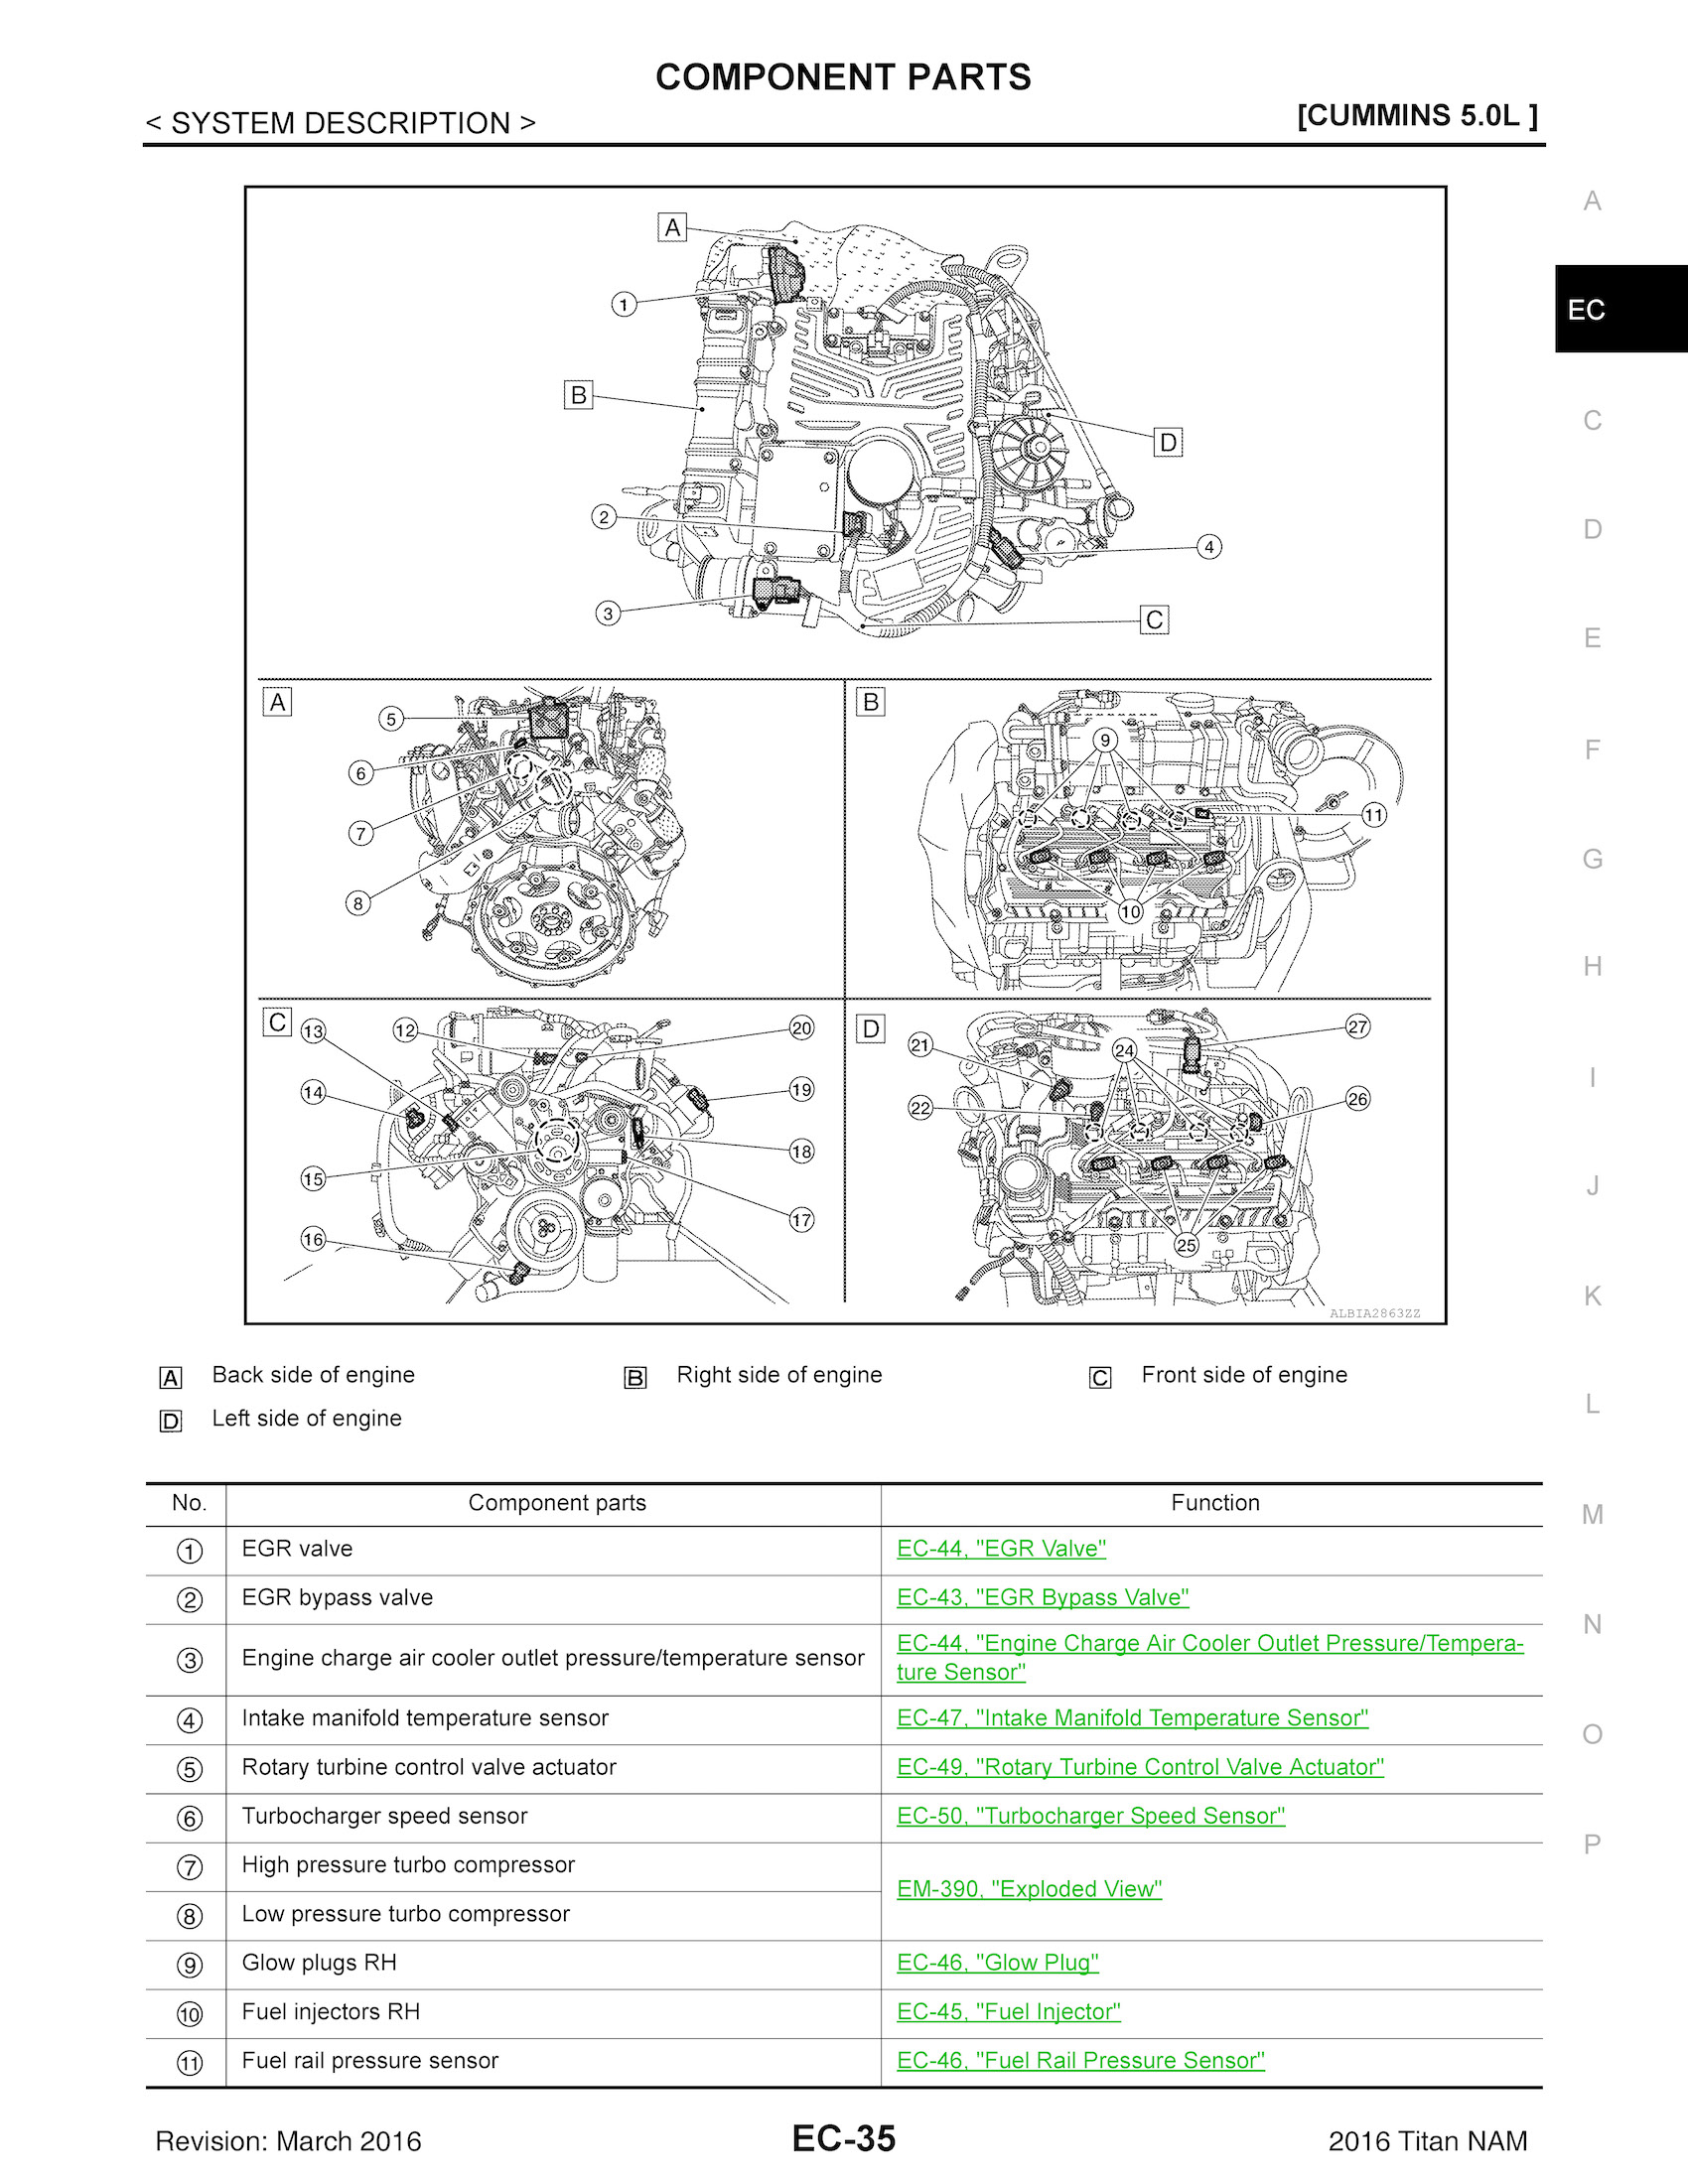 2016 Nissan Titan XD Repair Manual, Engine Cummins 5.0L Component Parts